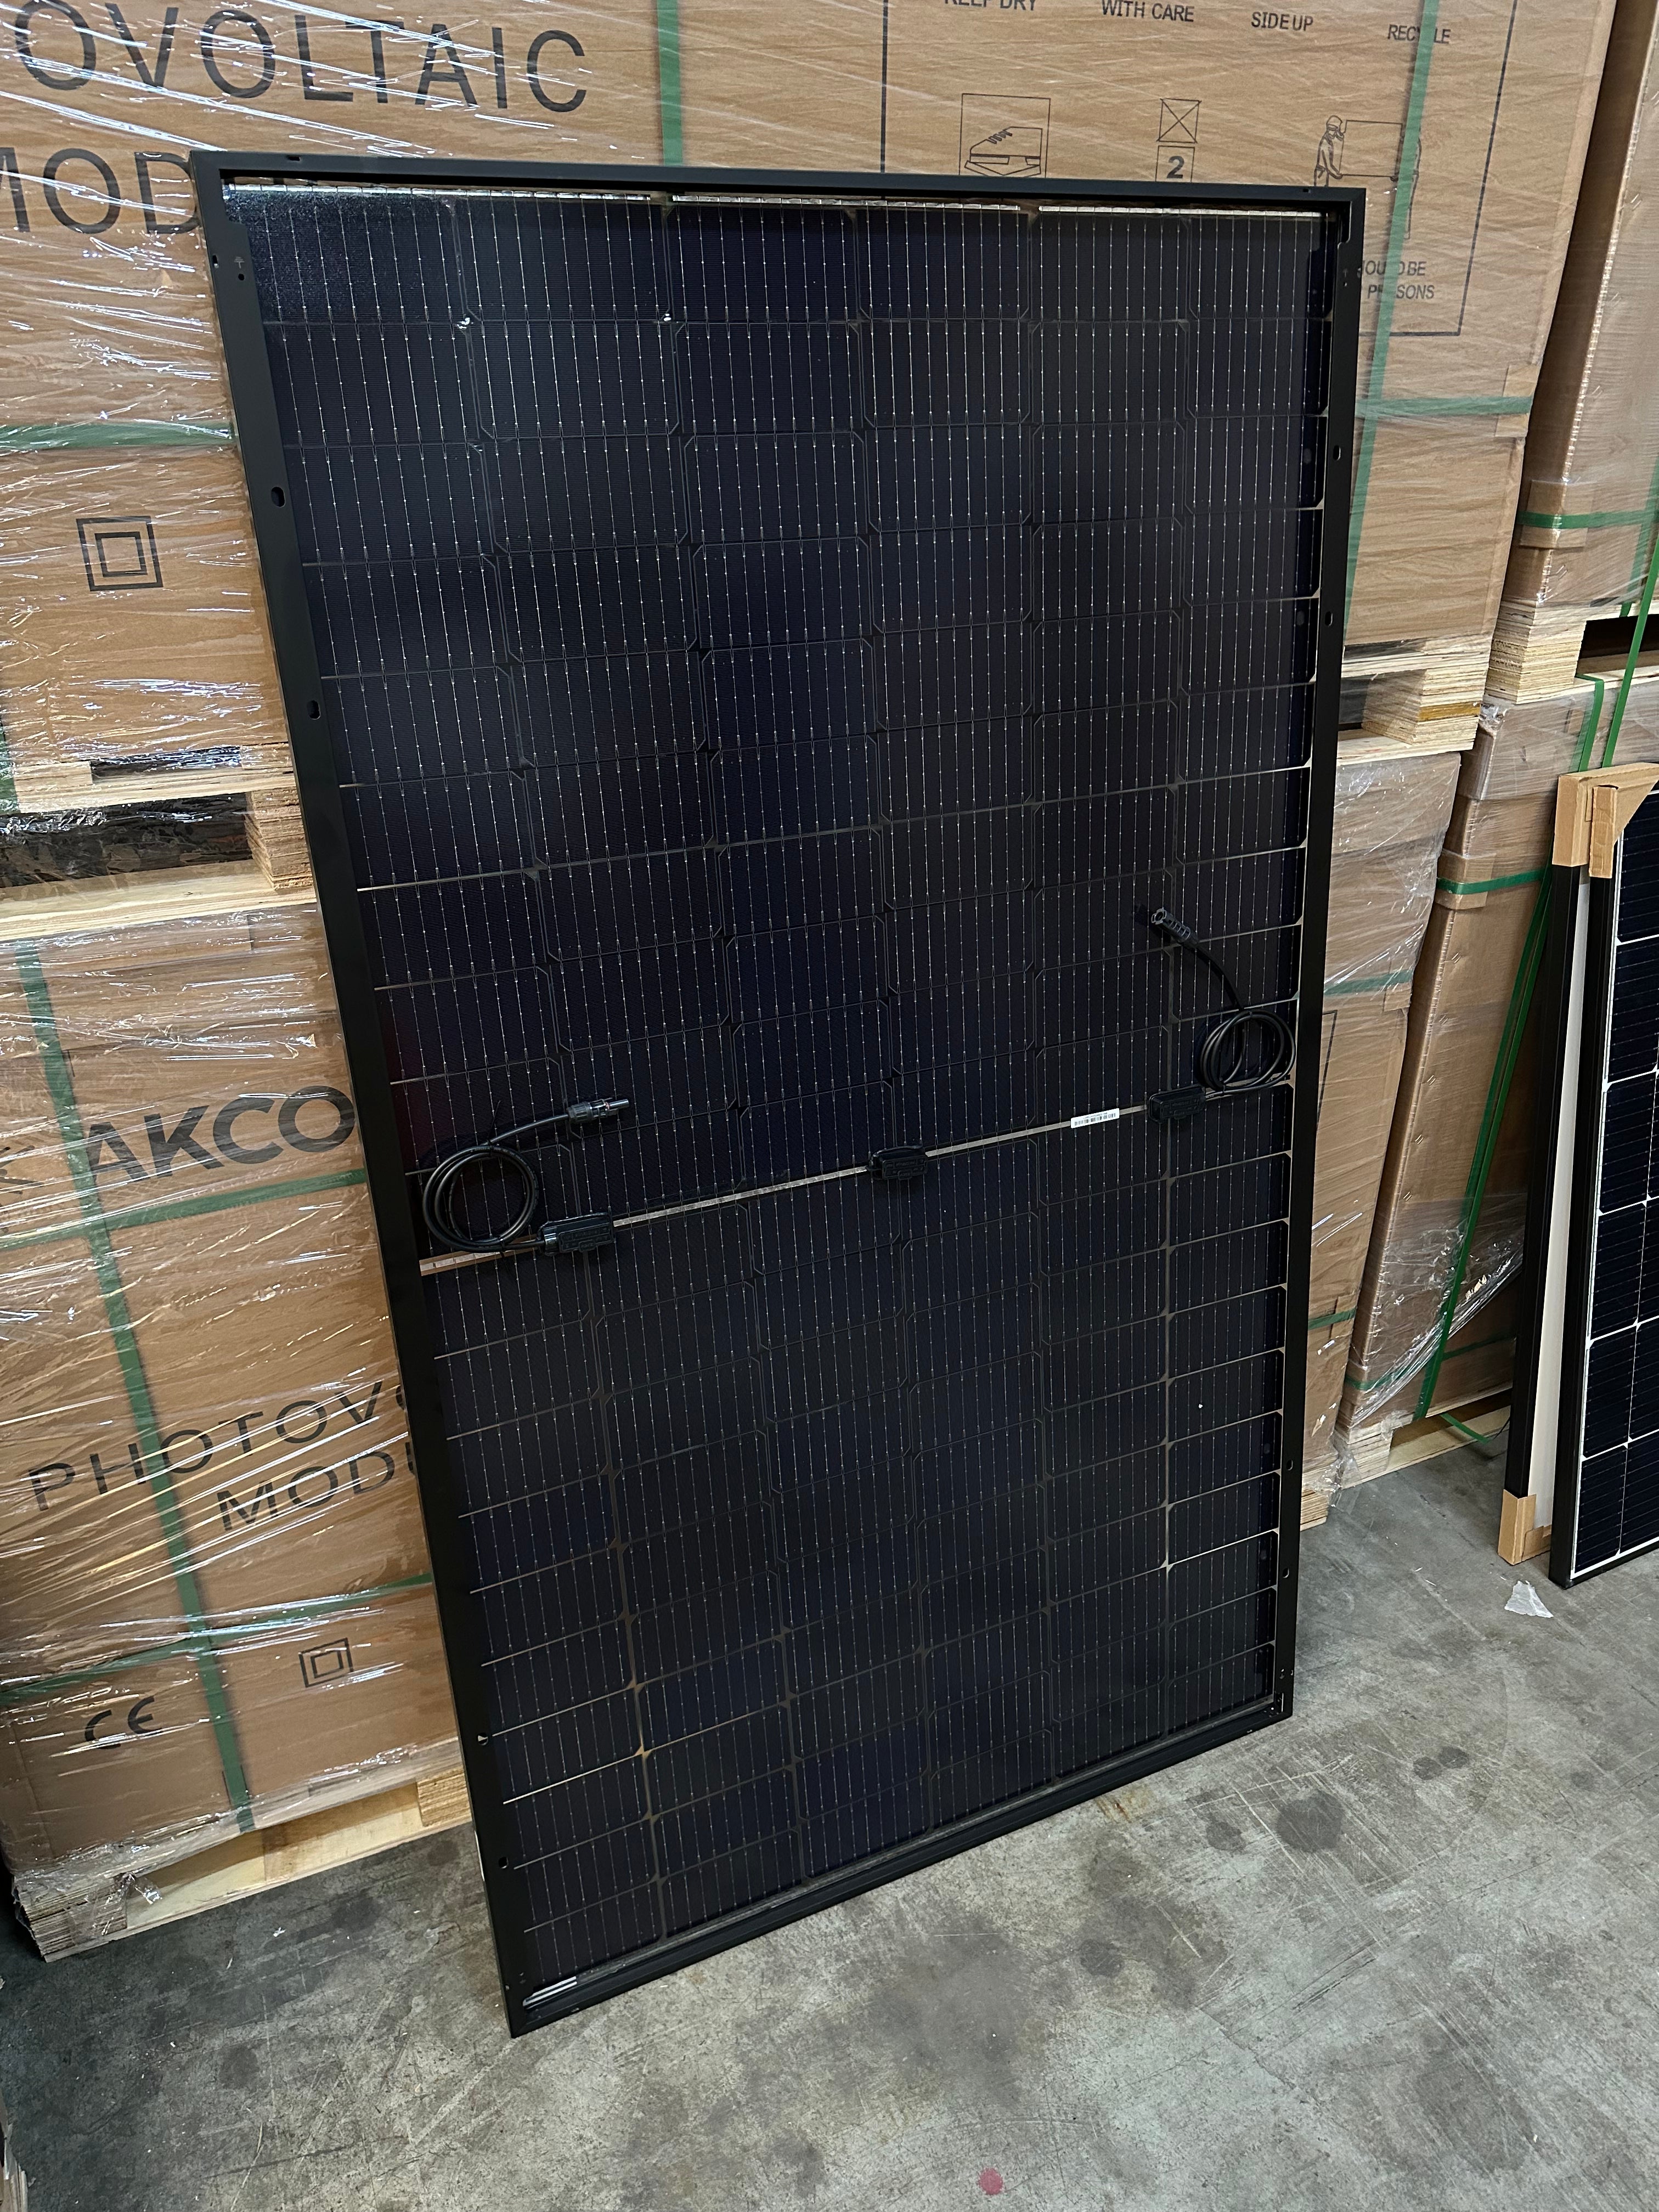 390W AKCOME N-Type HJT Bifacial Transparente Glas-Glas 1755x1038x30 mm Solarpanel Solarmodul Photovoltaik